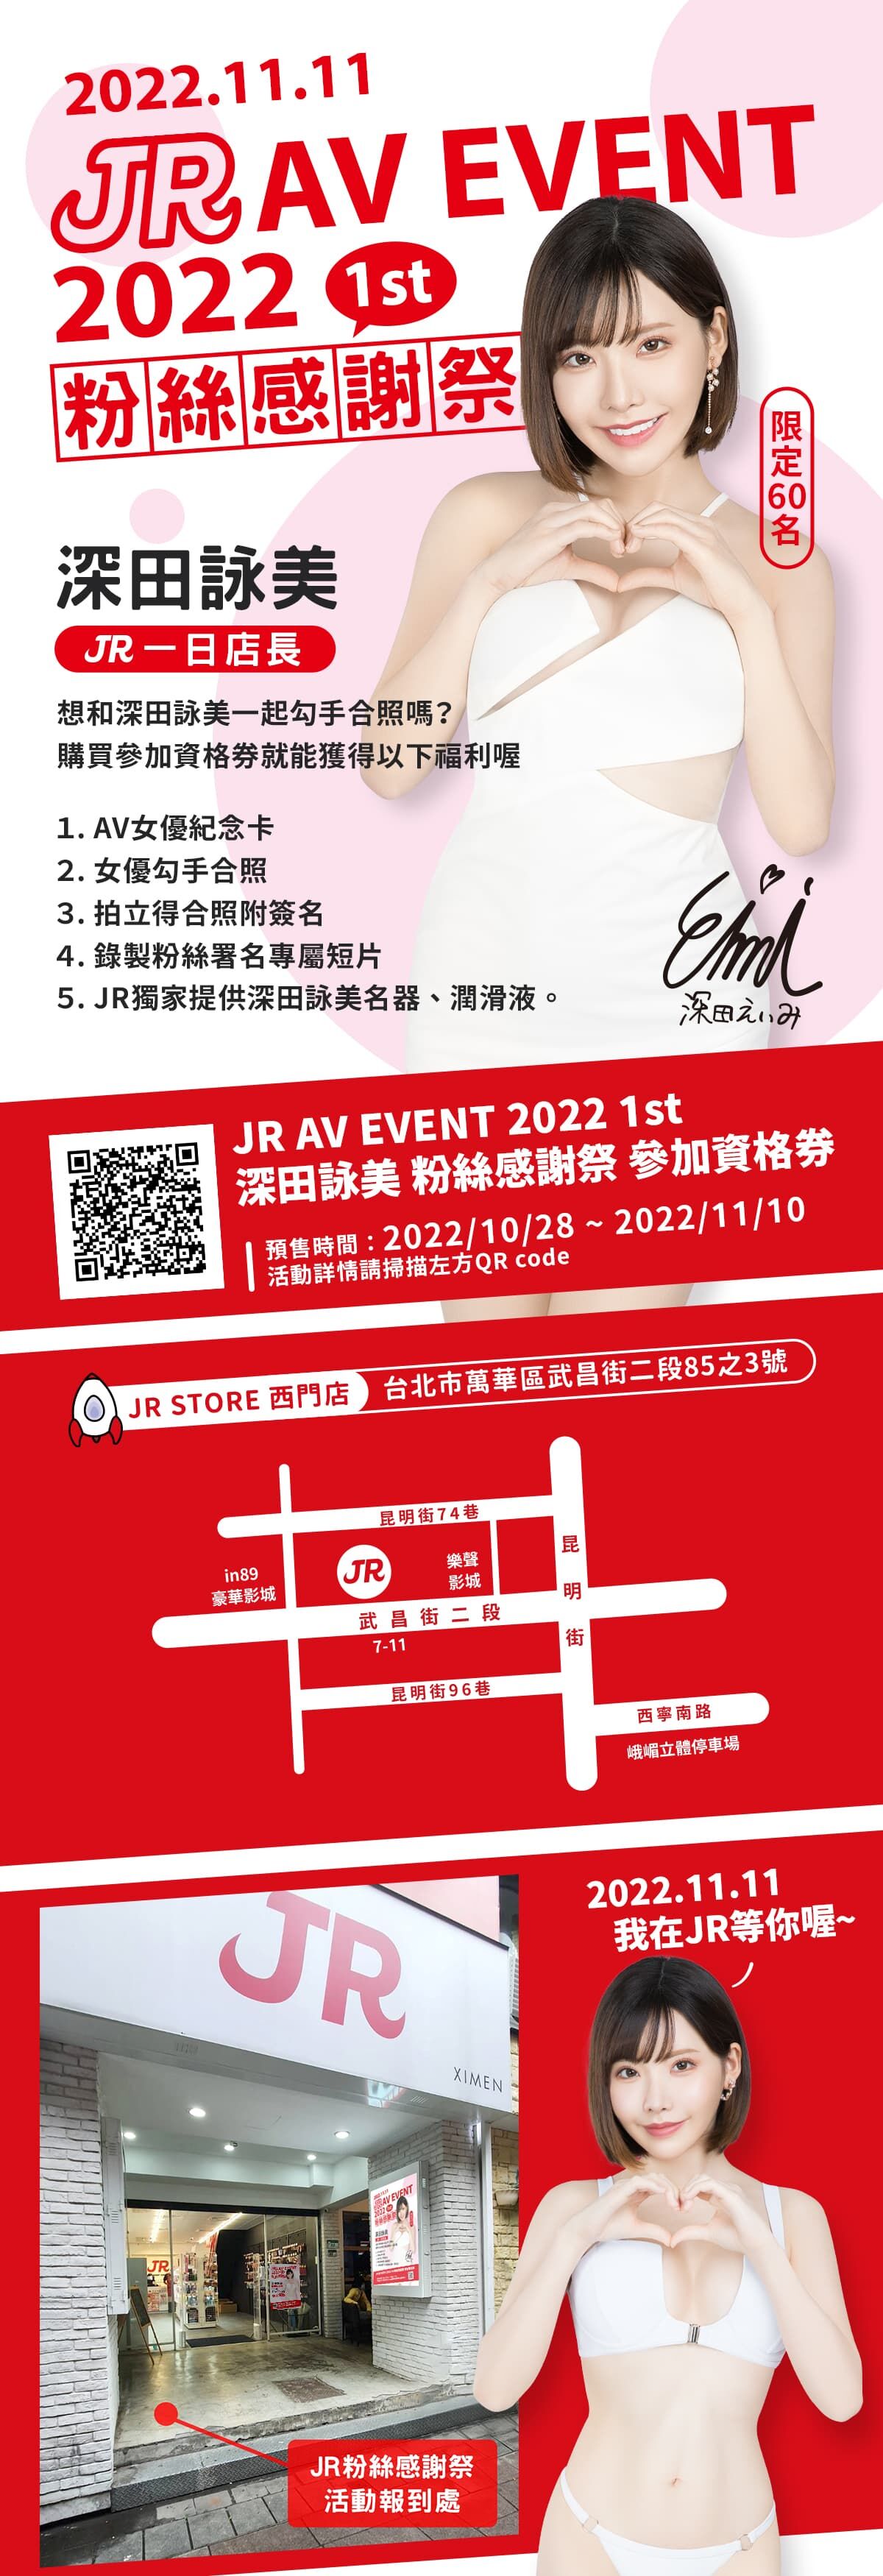 JR AV EVENT 2022 深田詠美粉絲感謝祭 的詳細資訊圖片